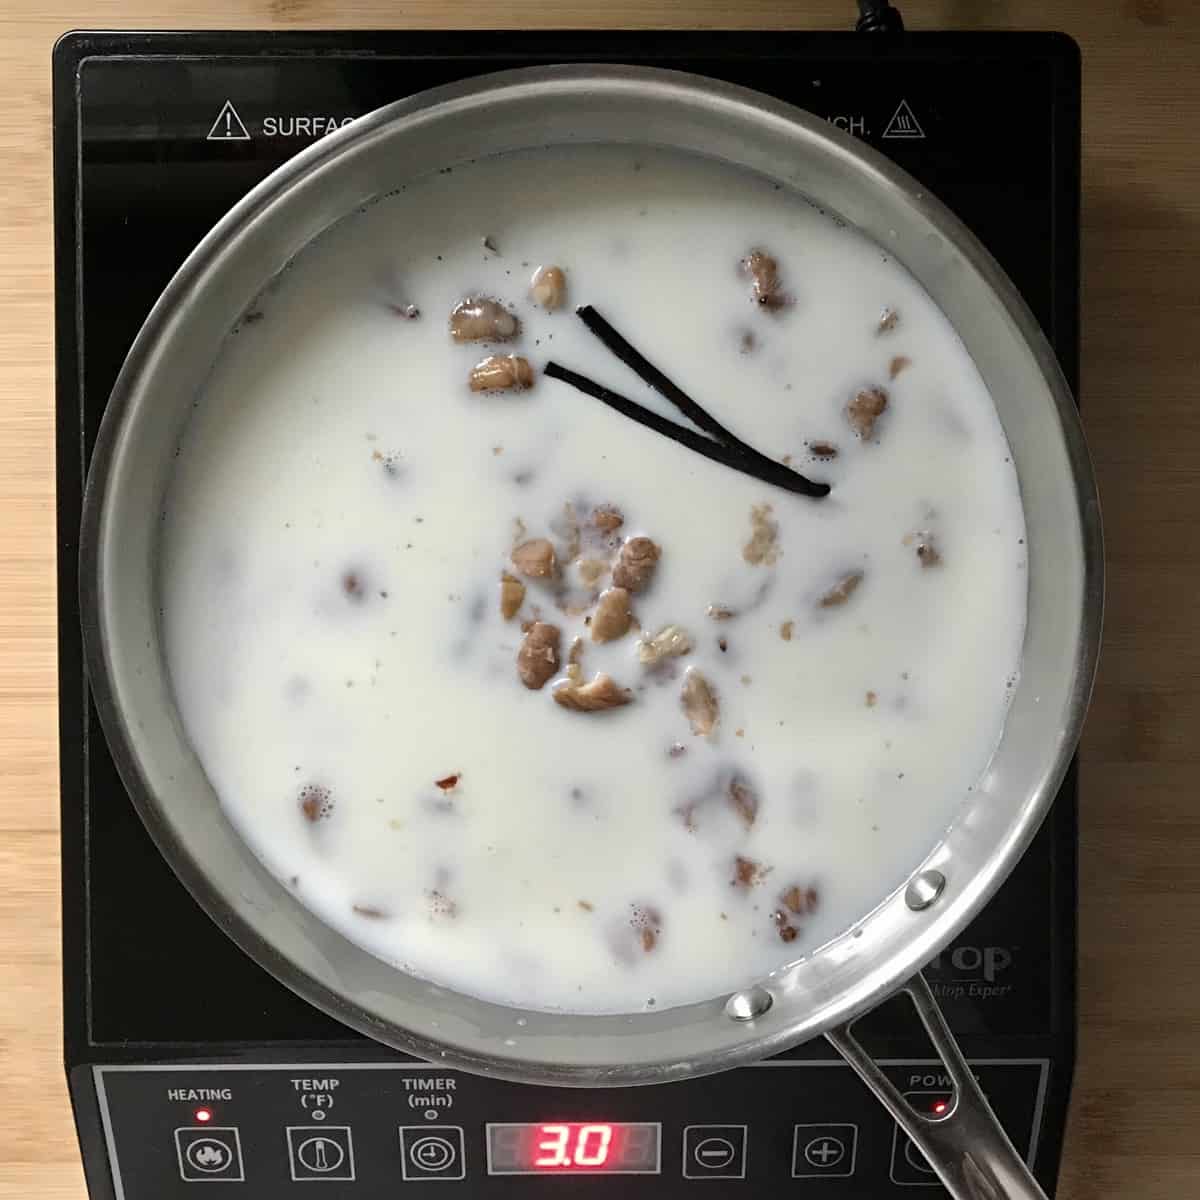 Chestnuts in a saucepan, simmering in milk. 